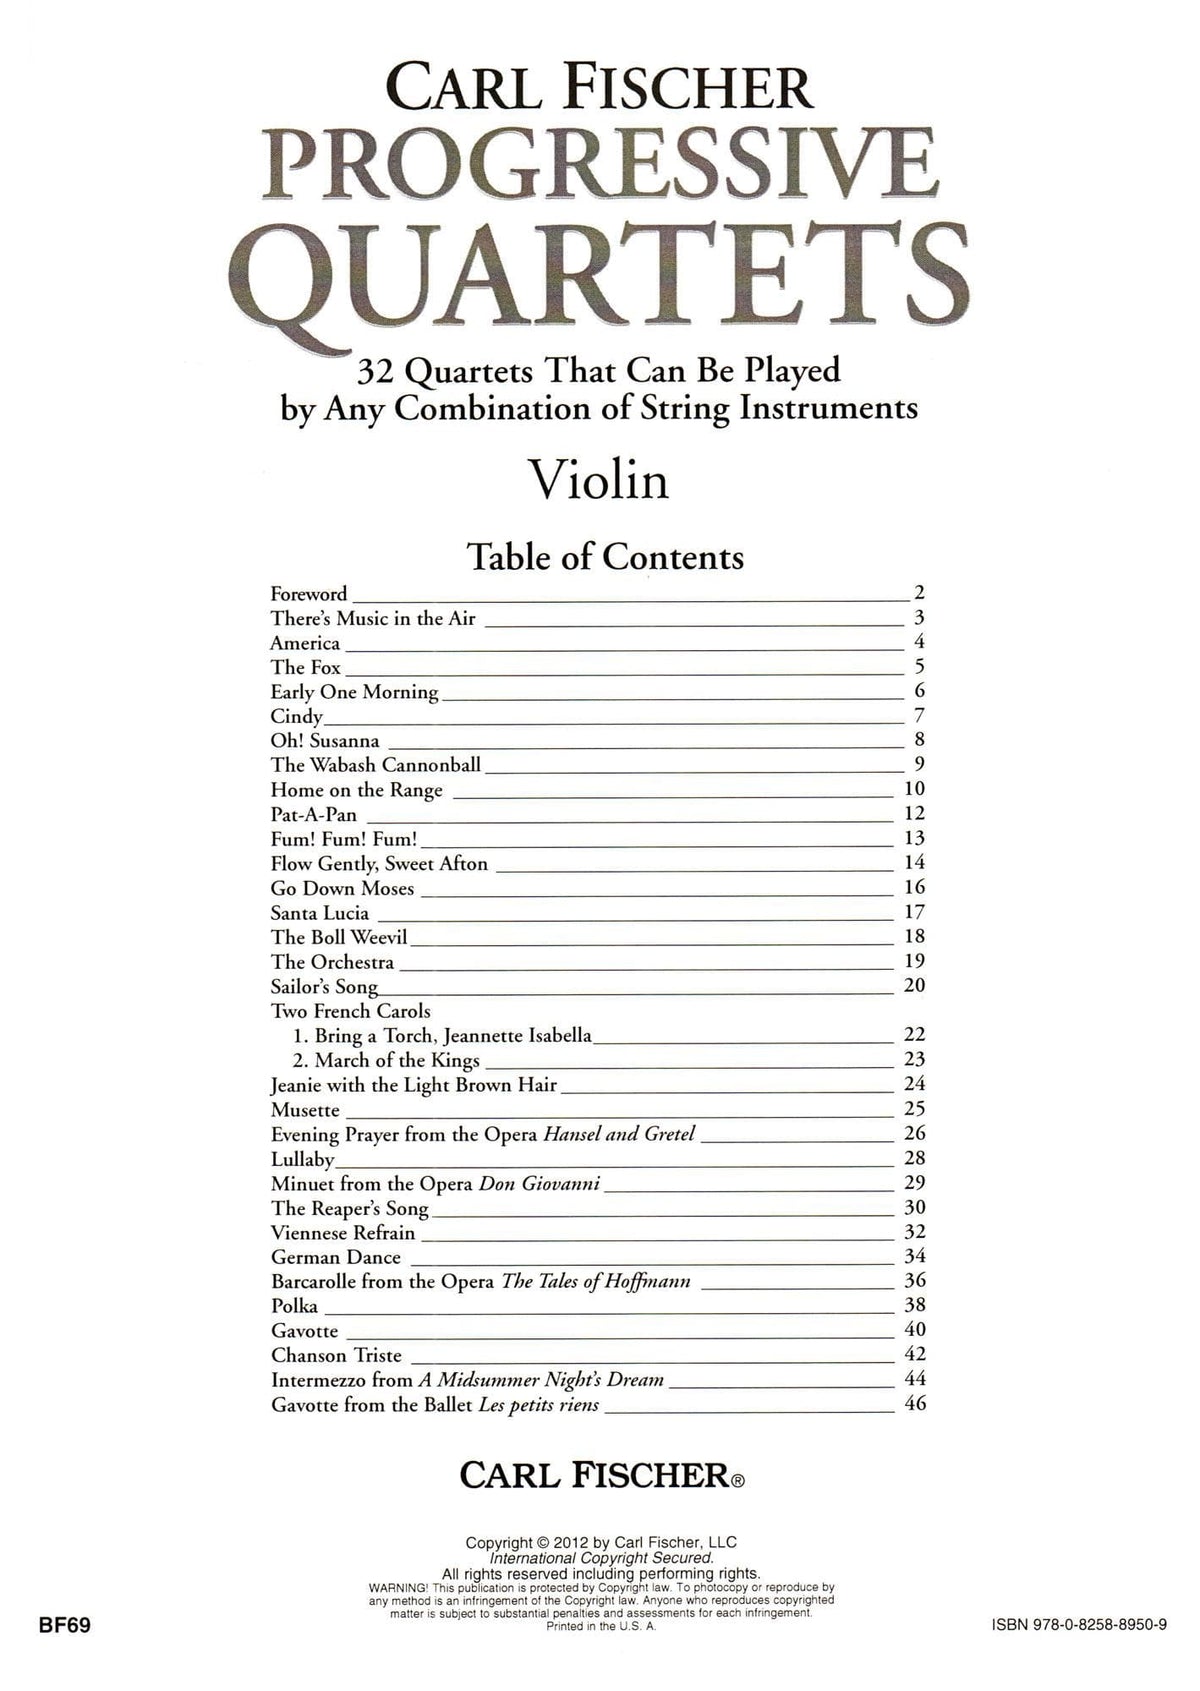 Progressive Quartets for Violin - 32 Quartets for Any Combination of Stringed Instruments - Arranged by Doris Gazda - Carl Fischer Publication